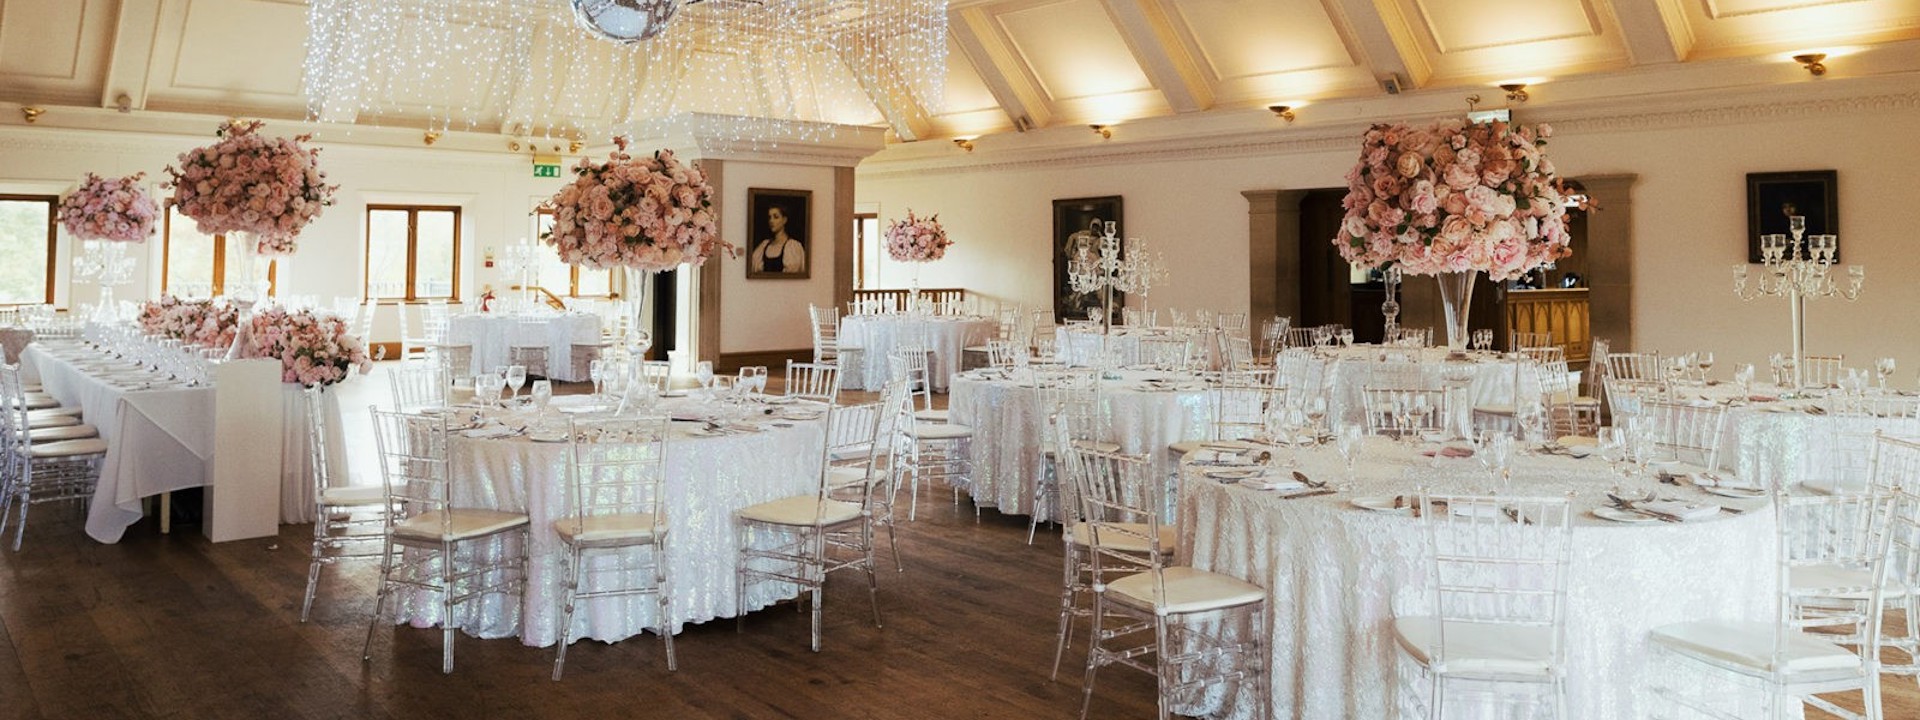 Wedding at Stock Brook Manor in Essex